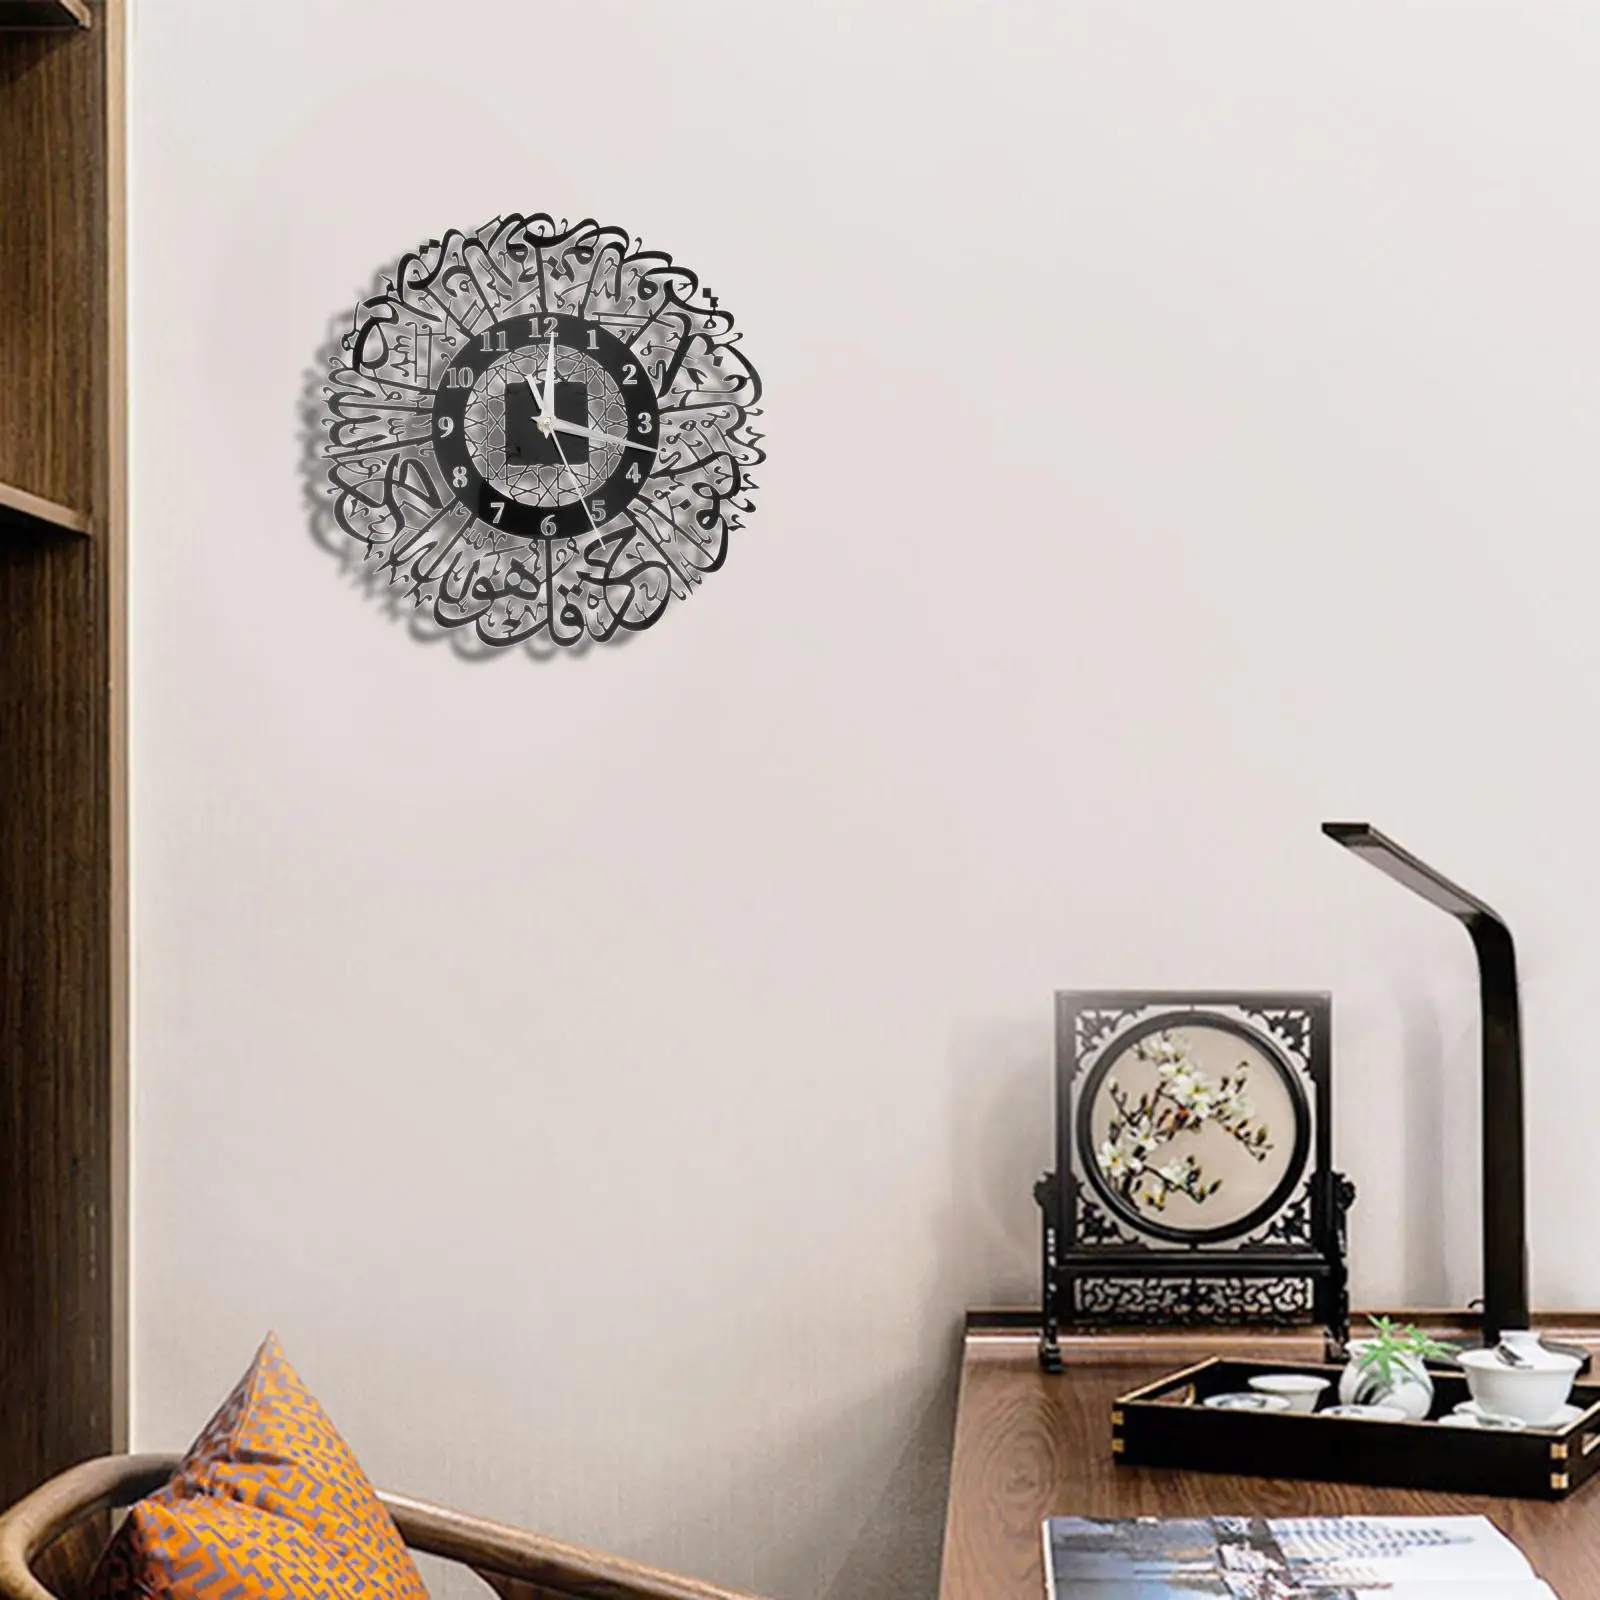 Acrylic Islamic Quartz Silent Wall Clock Silent Non Ticking Home Office School Decorative Clock Art for Islamic Muslim Culture